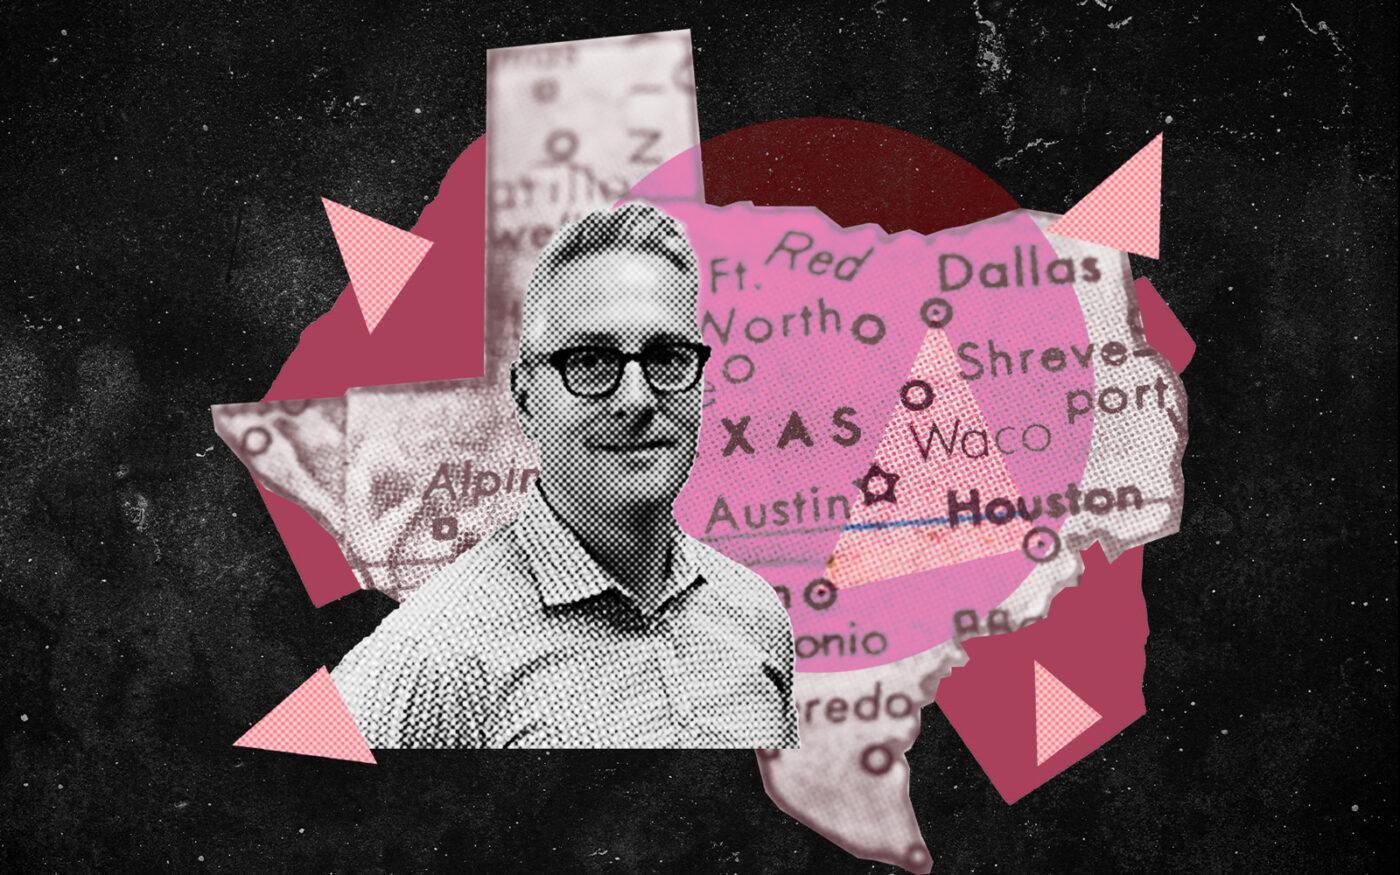 Alan Stalcup’s GVA Faces Foreclosure Across Texas Triangle